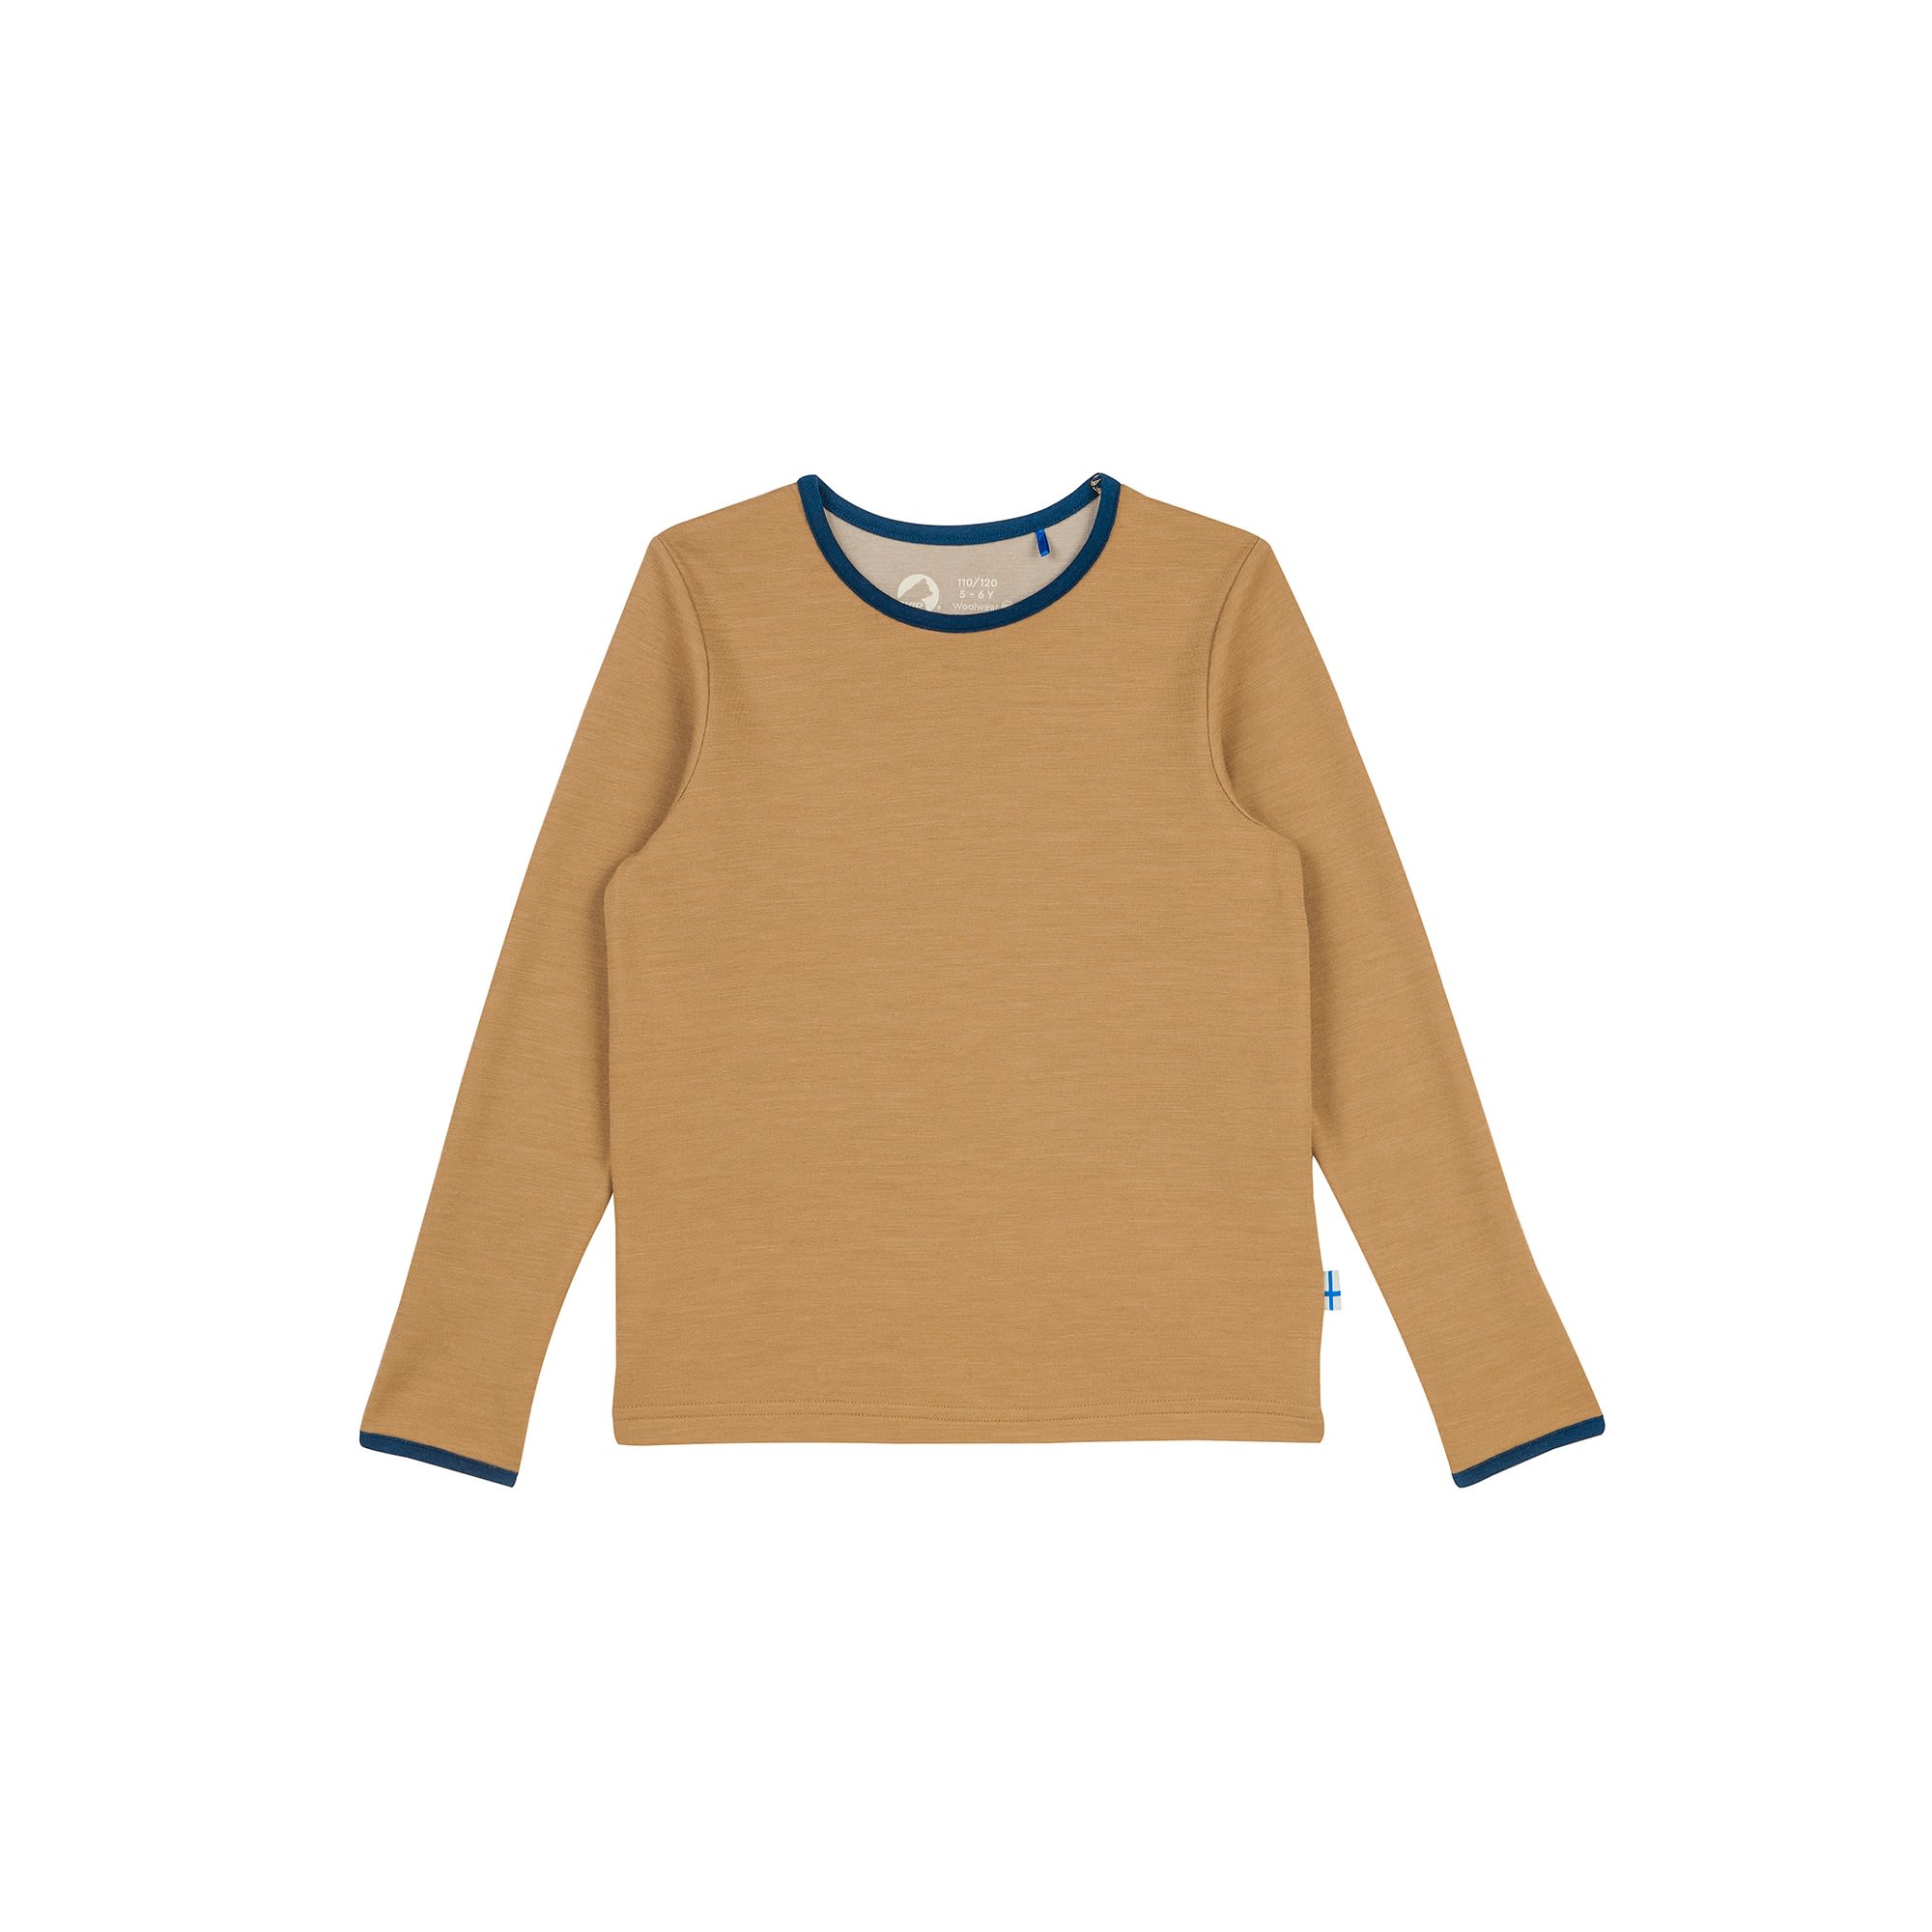 Finkid Taamo Wool Braun- Langarm-Shirts- Grsse 80 - 90 - Farbe Cinnamon - Navy